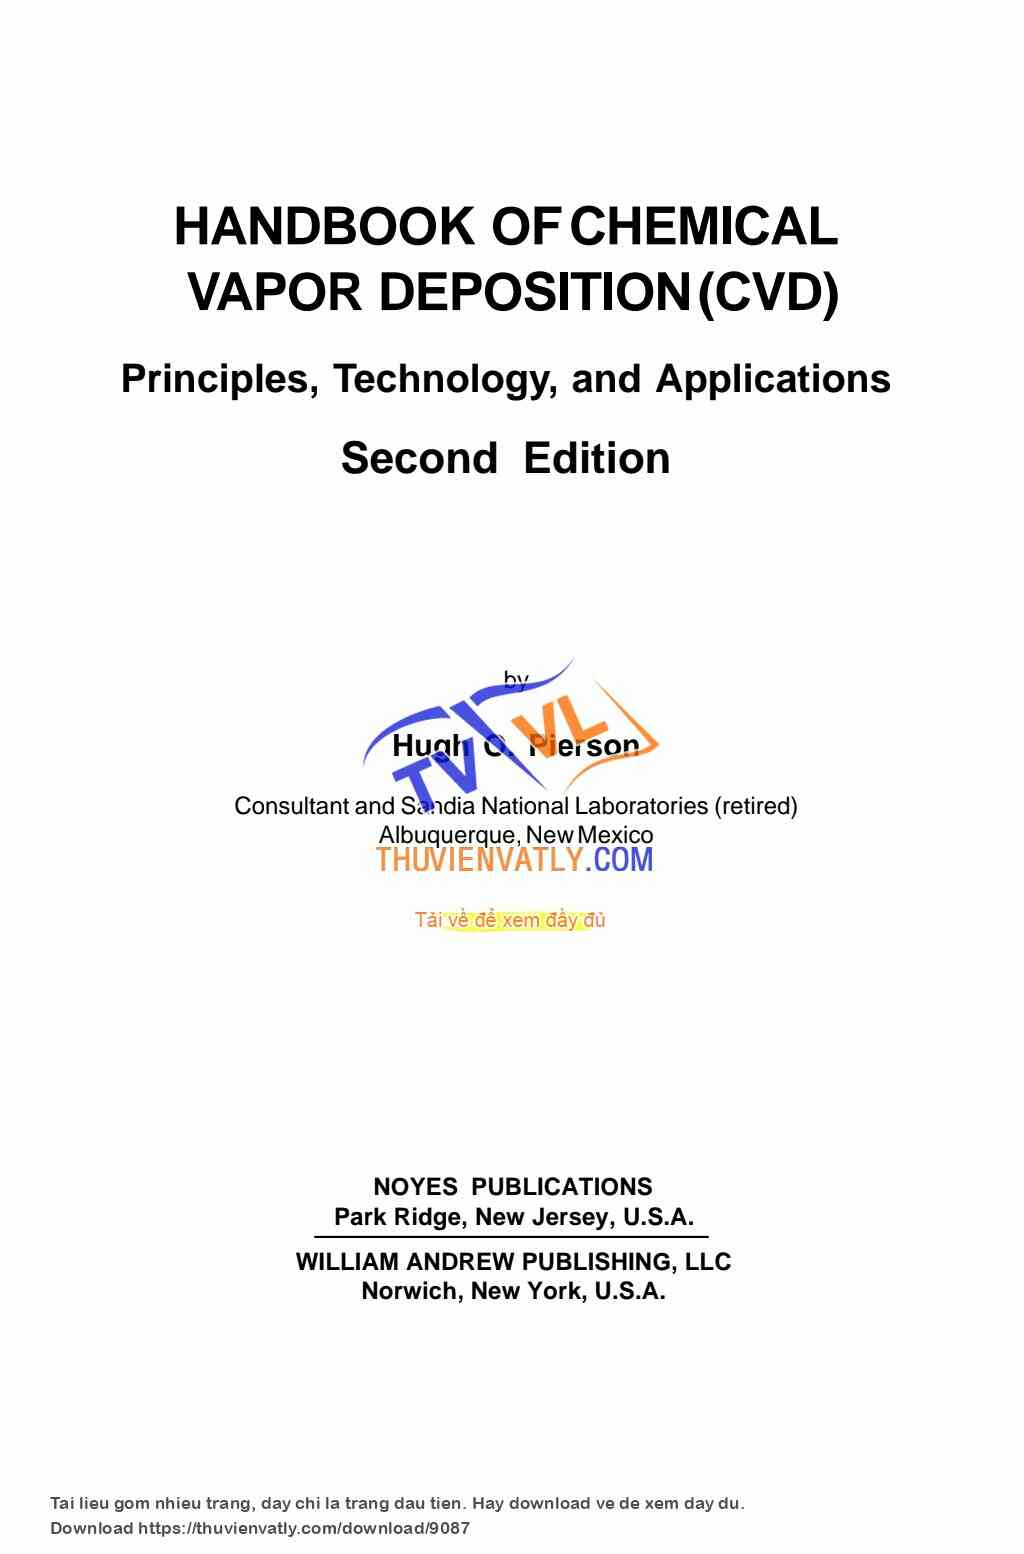 Handbook of Chemical vapor deposition